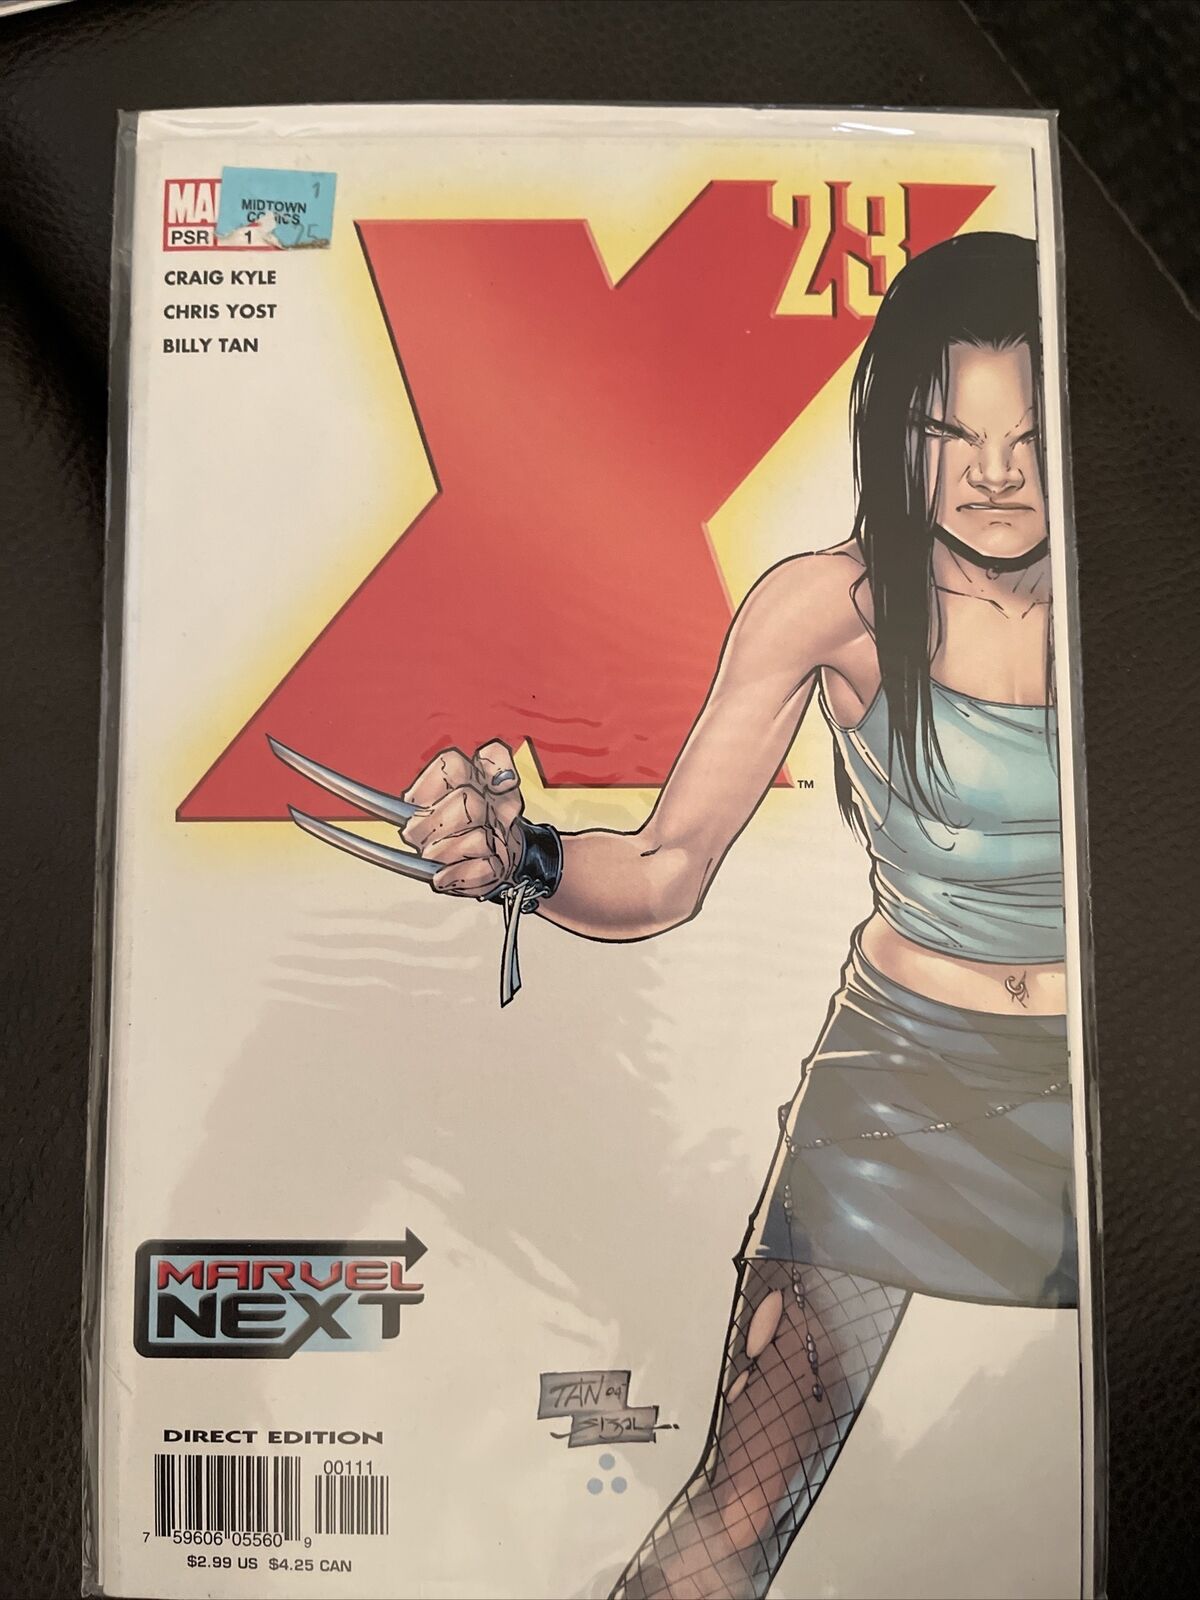 X-23 (2005) # 1 - 1st Laura Kinney X-23 solo series, Origin story